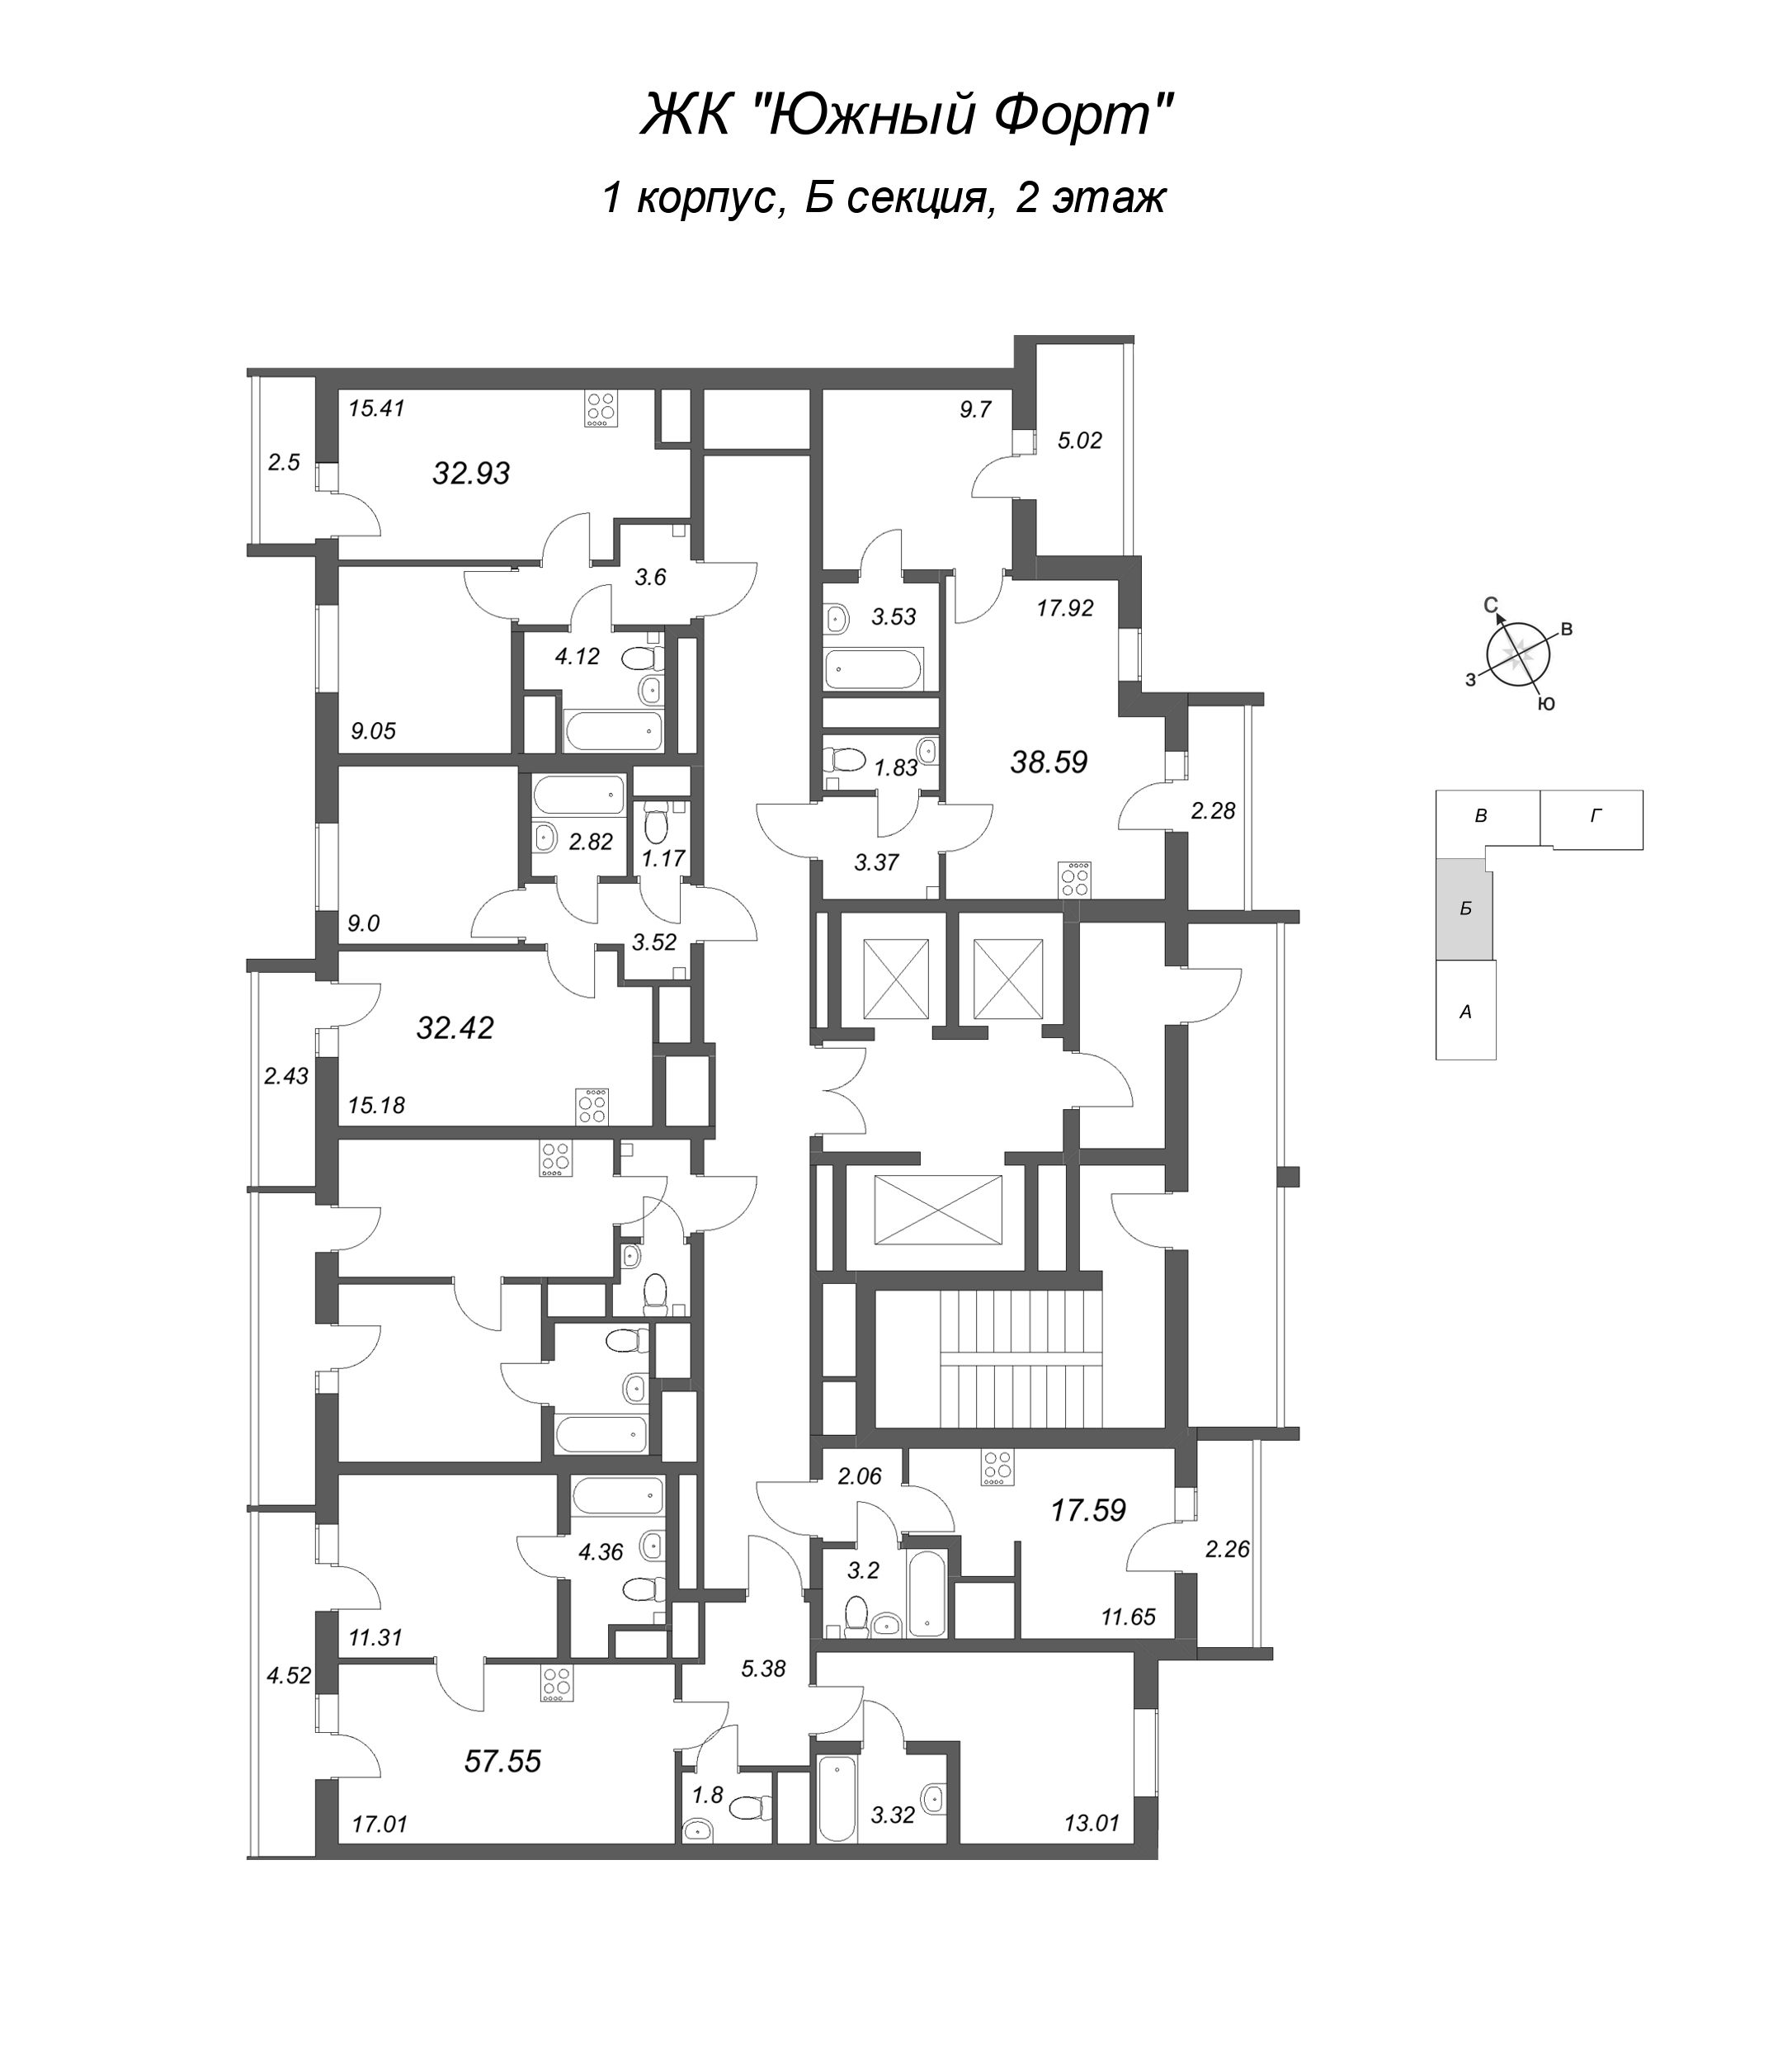 2-комнатная (Евро) квартира, 32.93 м² - планировка этажа